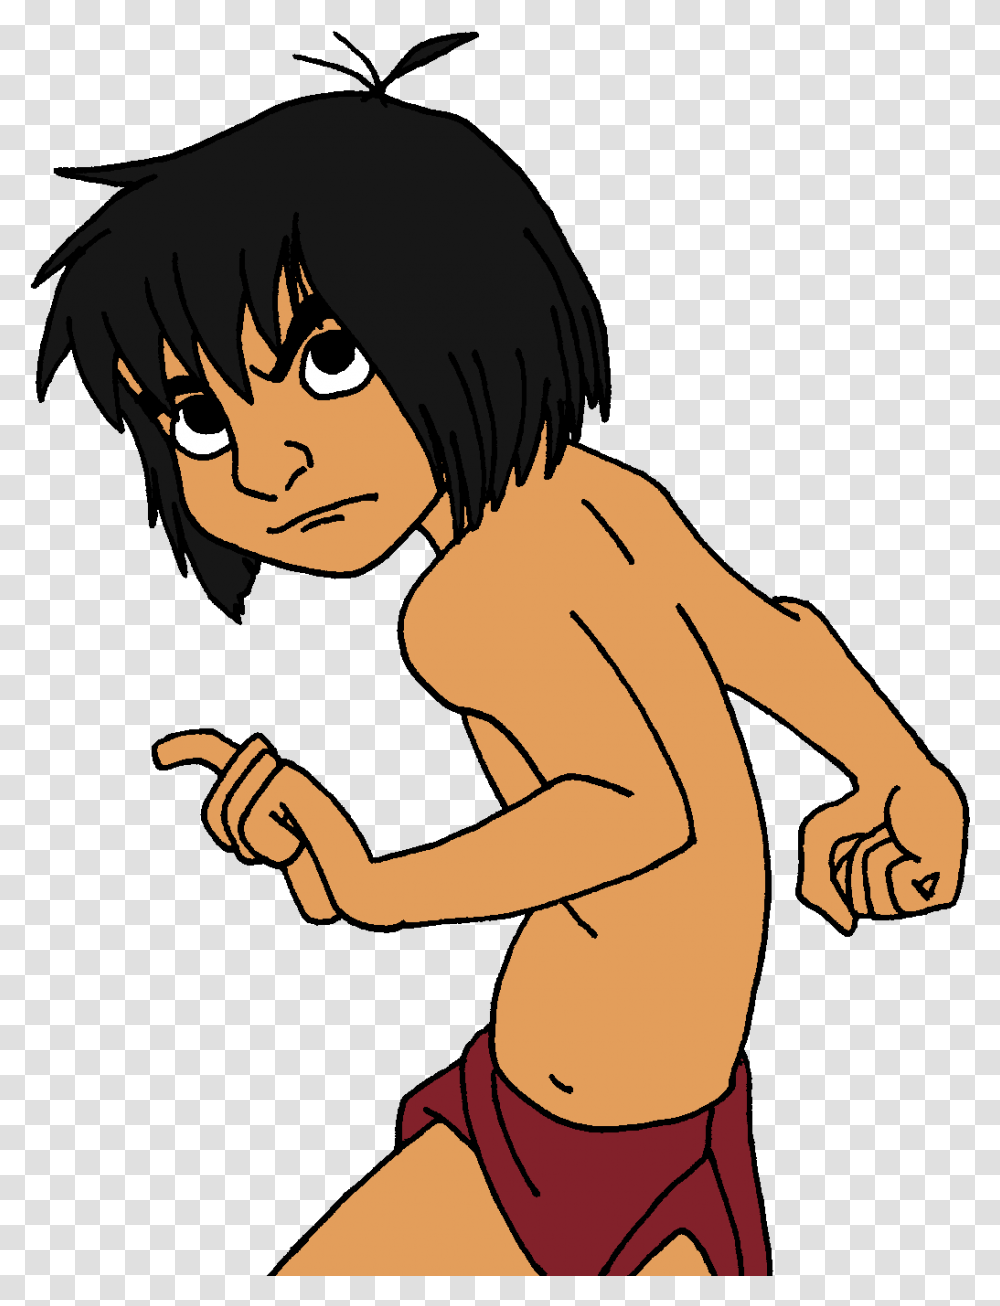 Mowgli The Jungle Book Shere Khan Baloo Bagheera Mowgli Jungle Book Clipart Kisspng, Person, Human, Back, Cupid Transparent Png